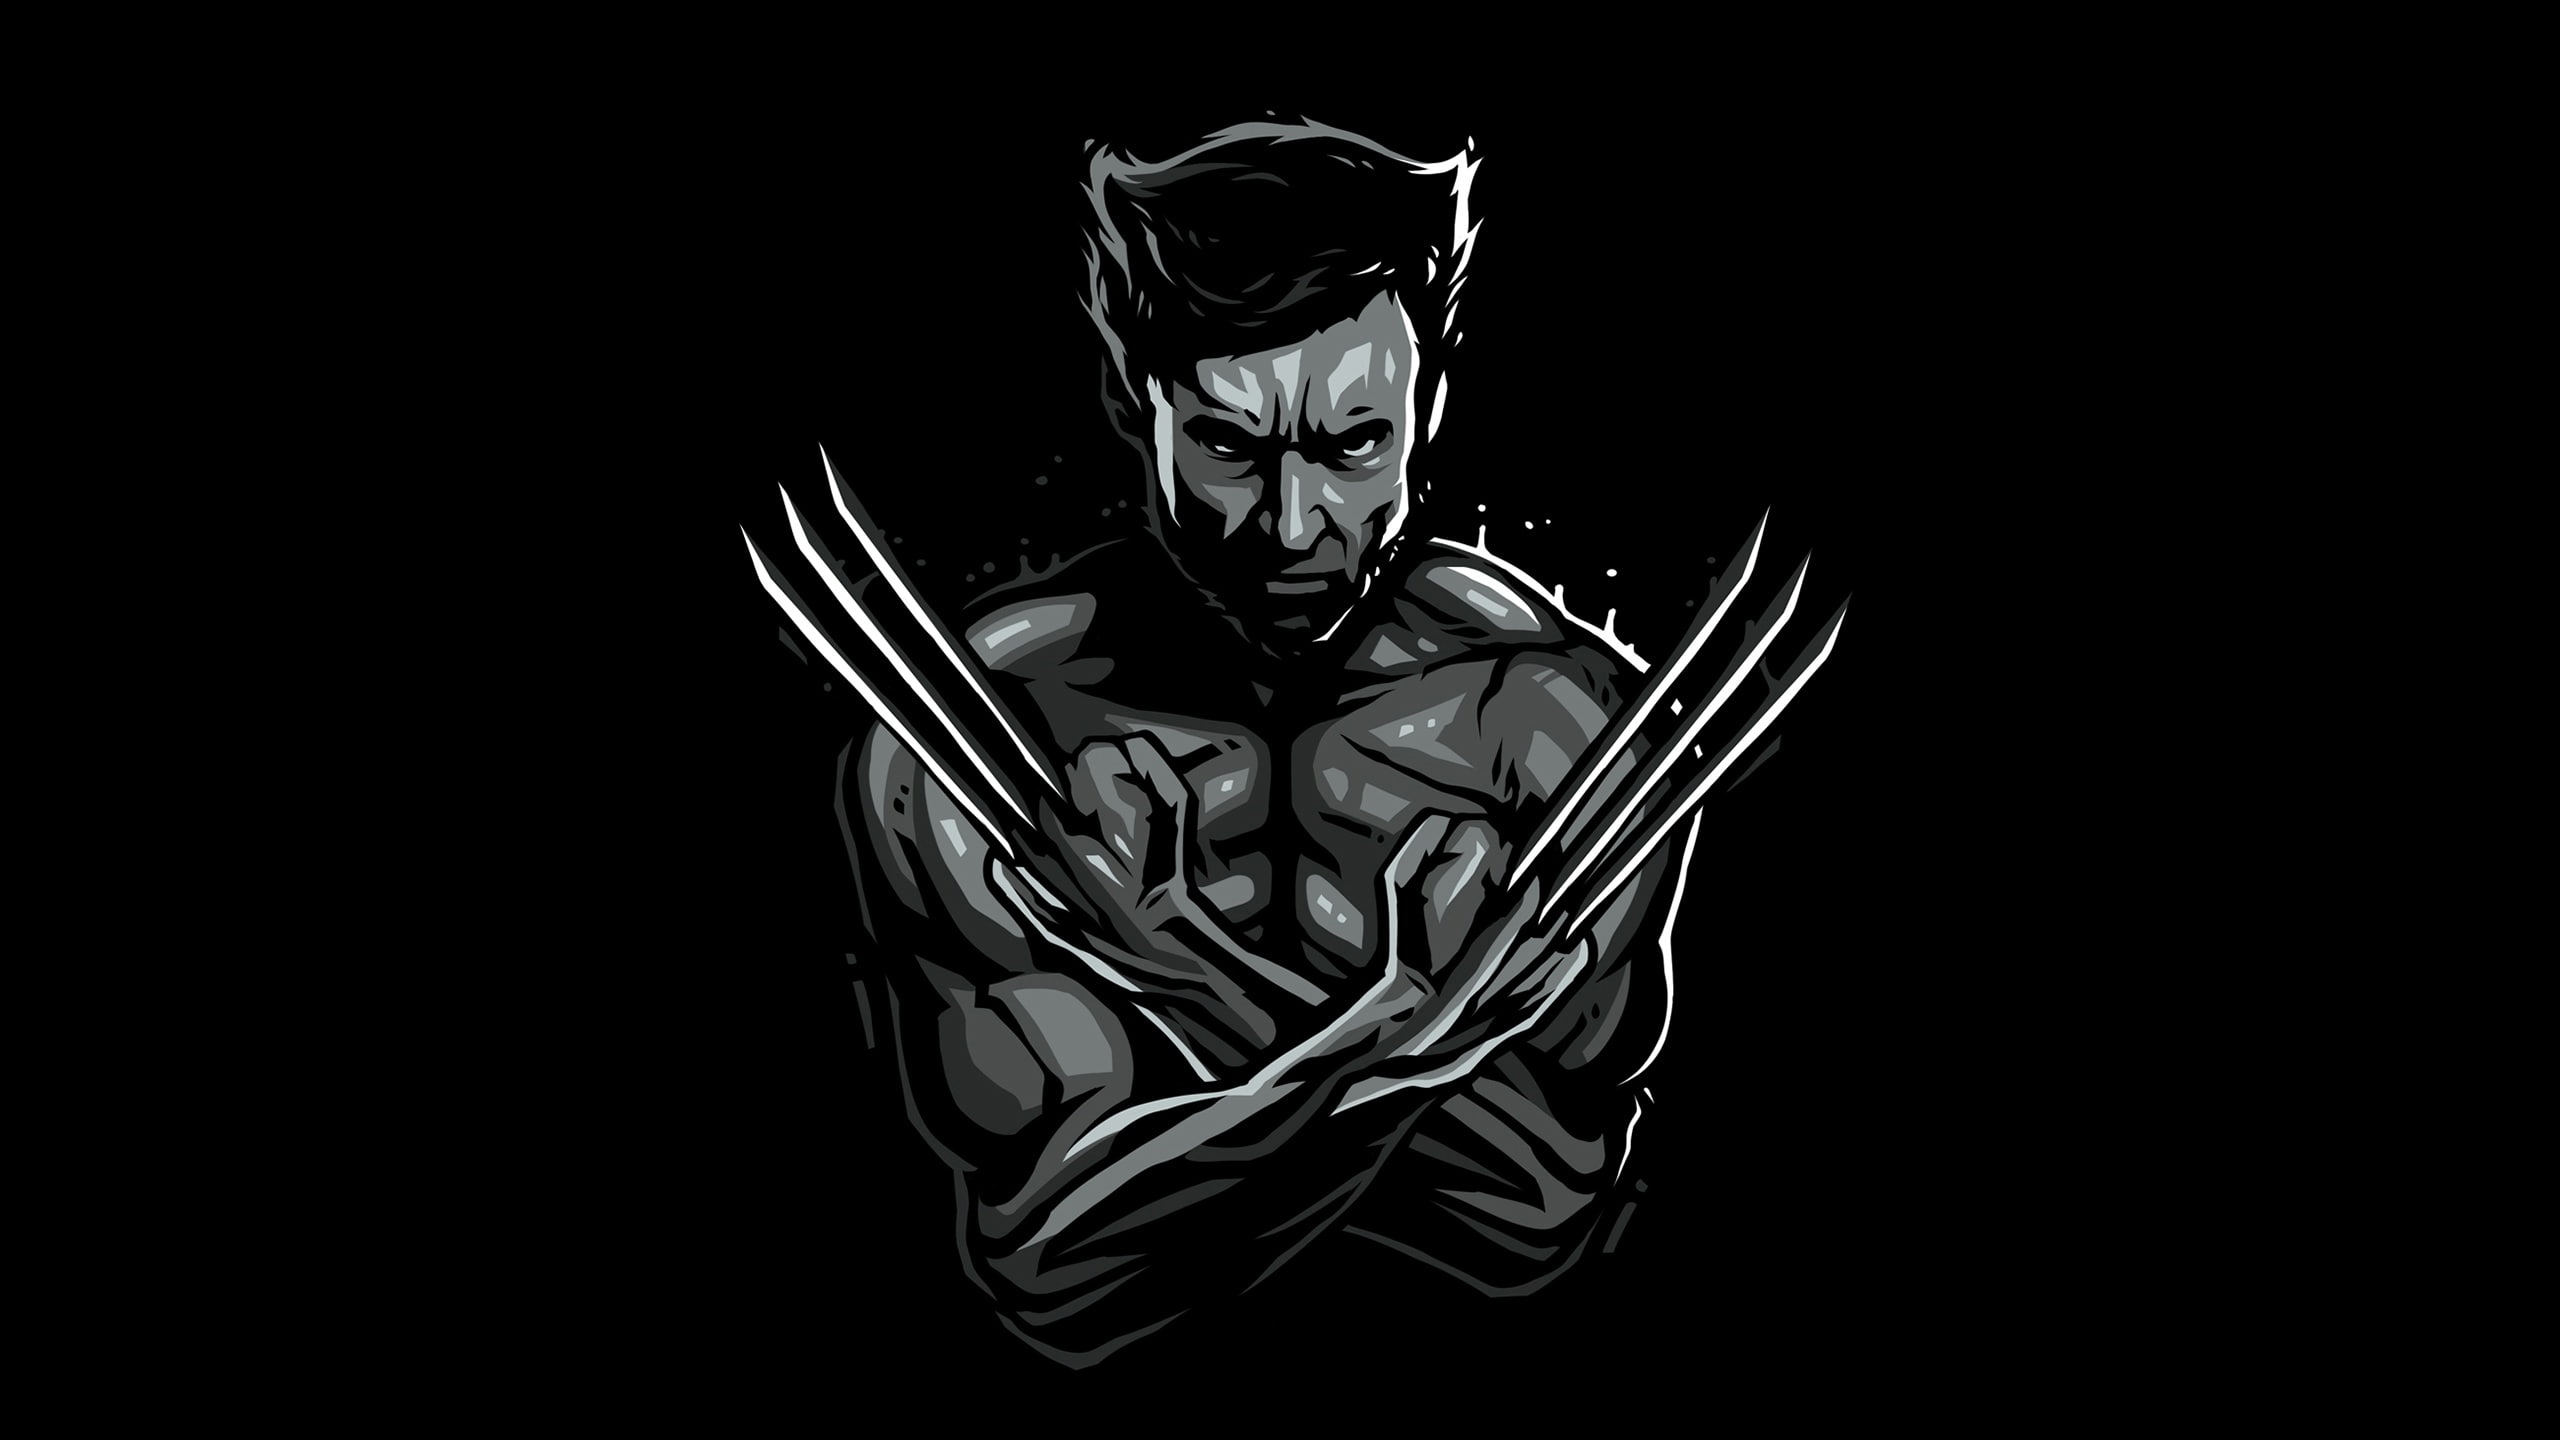 art, black and white, Wolverine, black background, Hugh Jackman